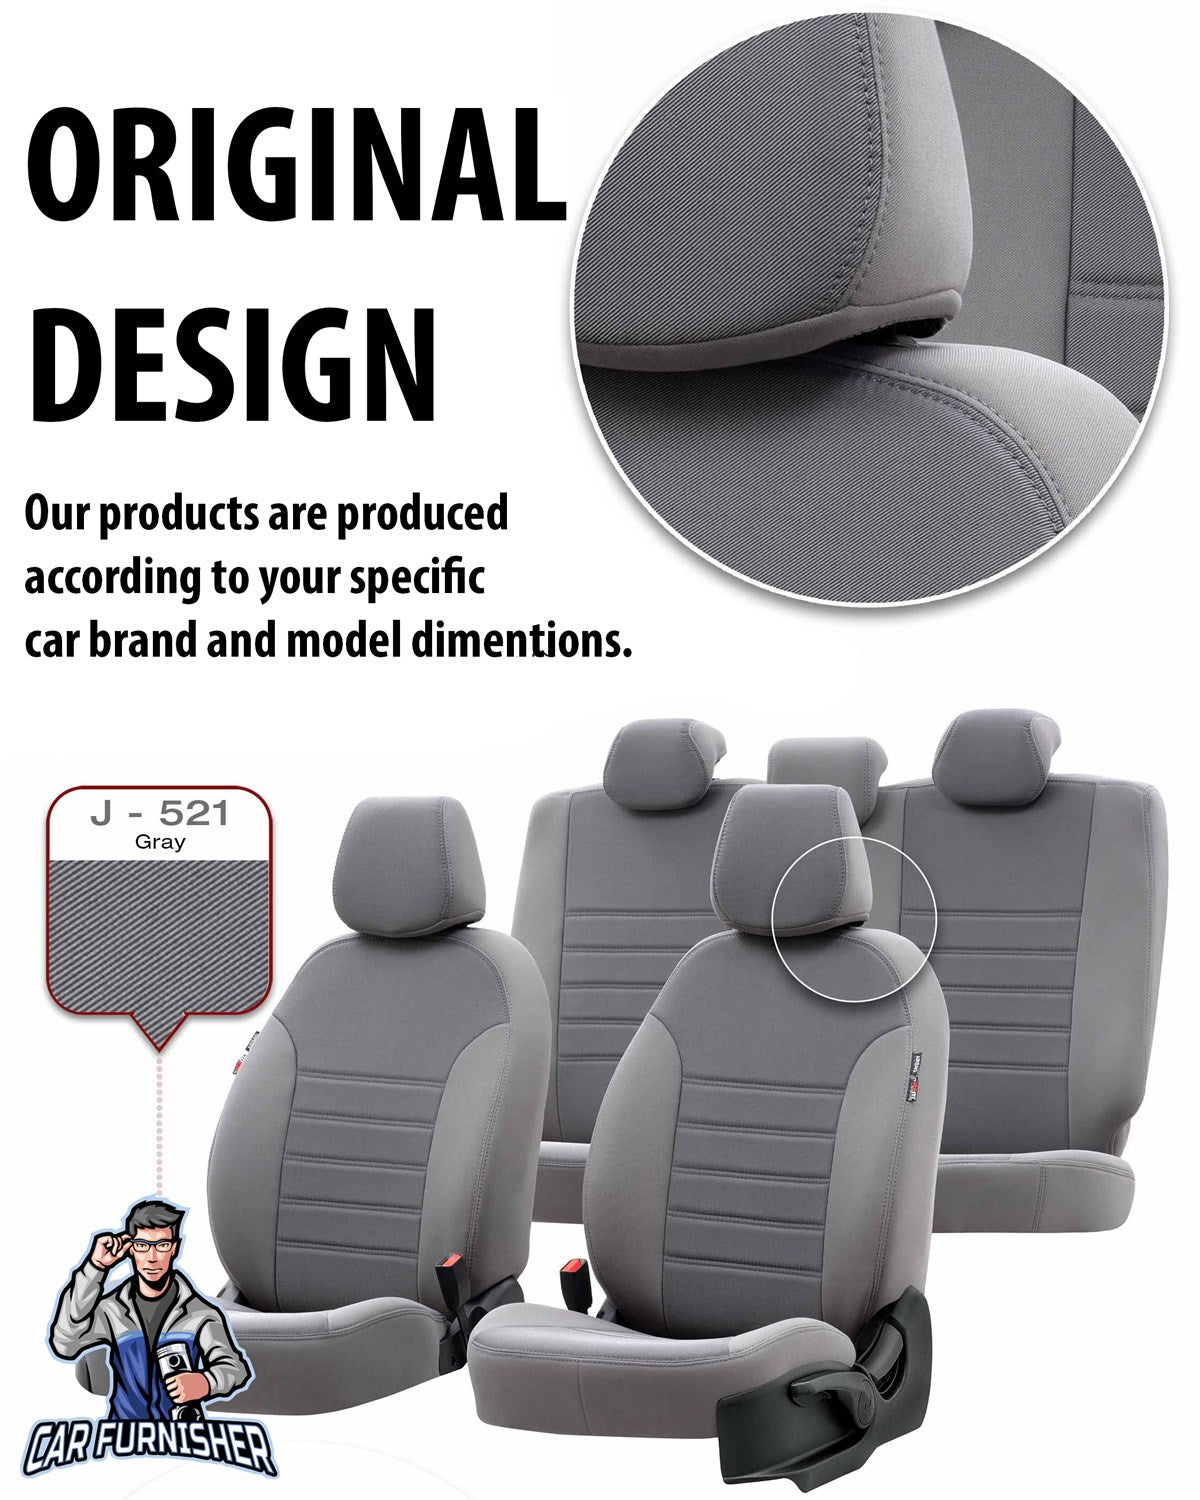 Renault Twingo Seat Cover Original Jacquard Design Light Gray Jacquard Fabric